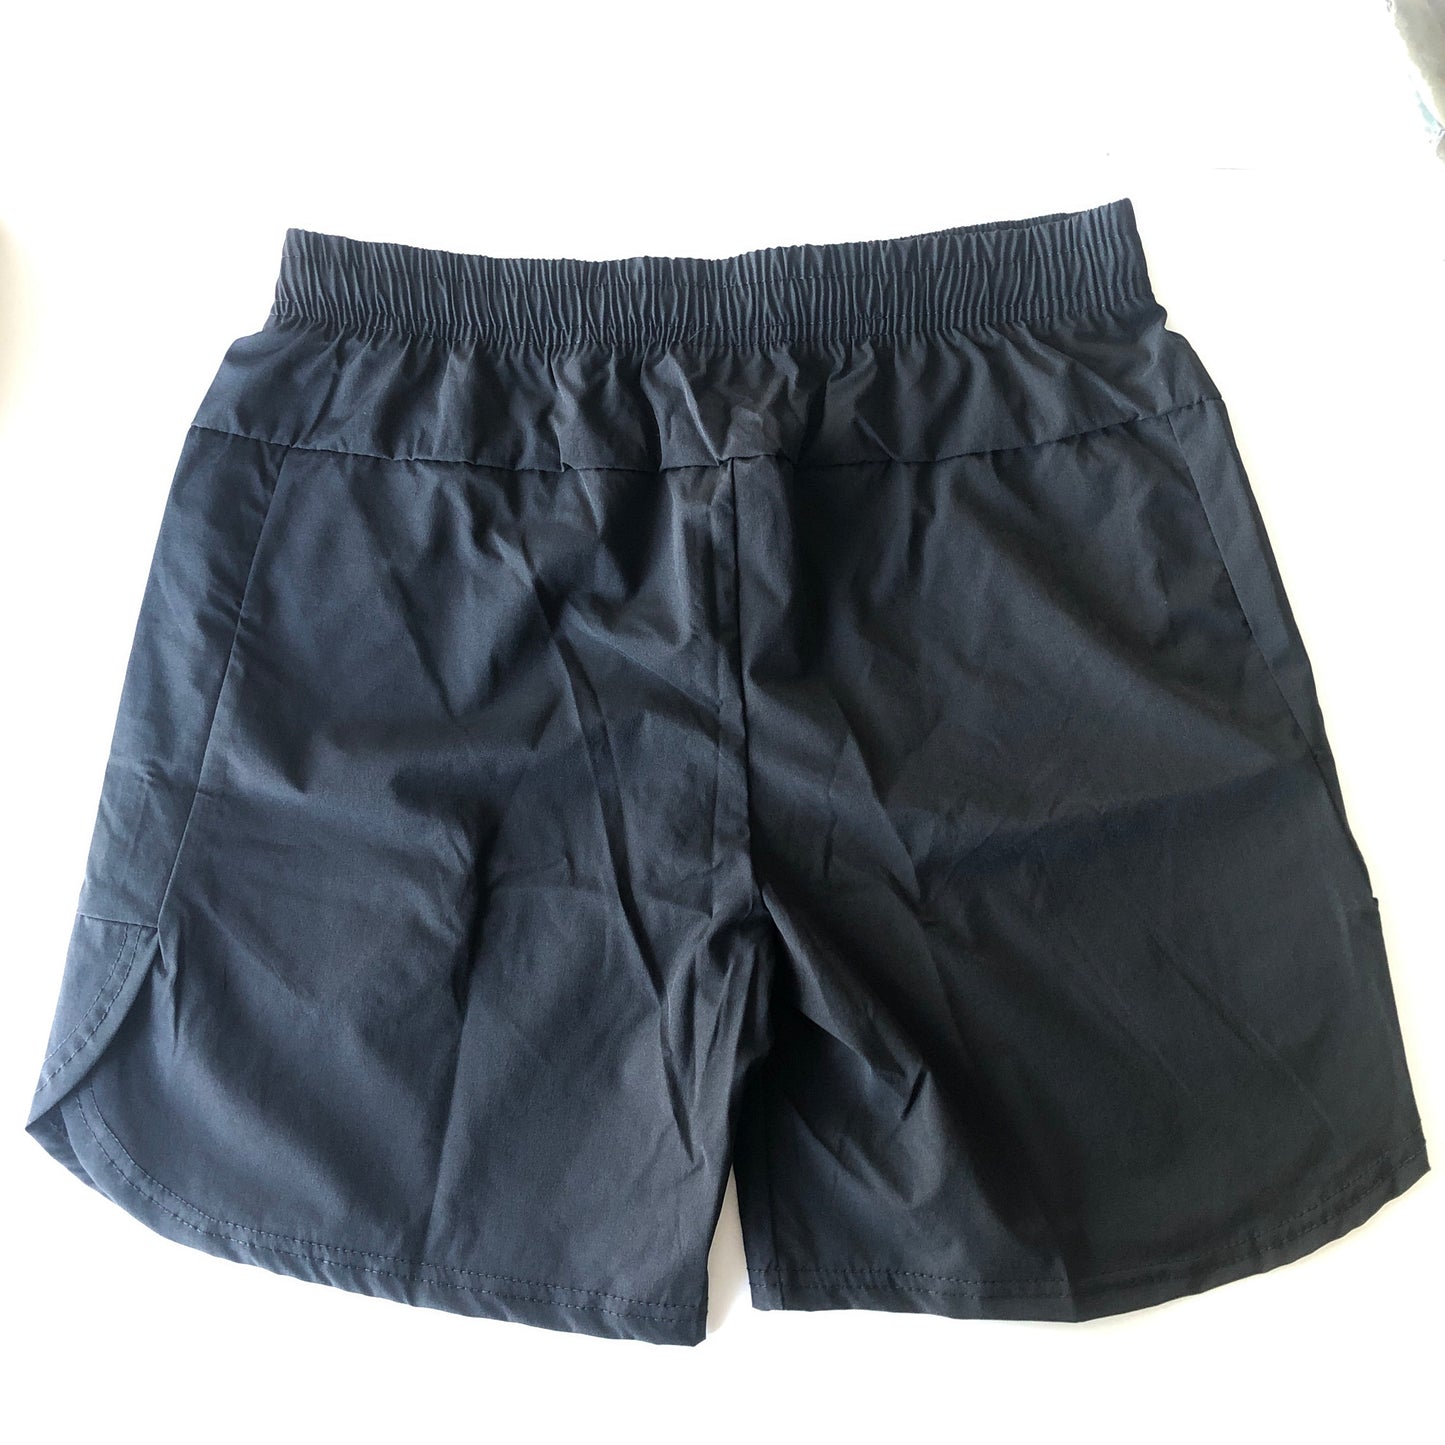 VO Quick Dry Gym/Running Men's Shorts - Navy Blue